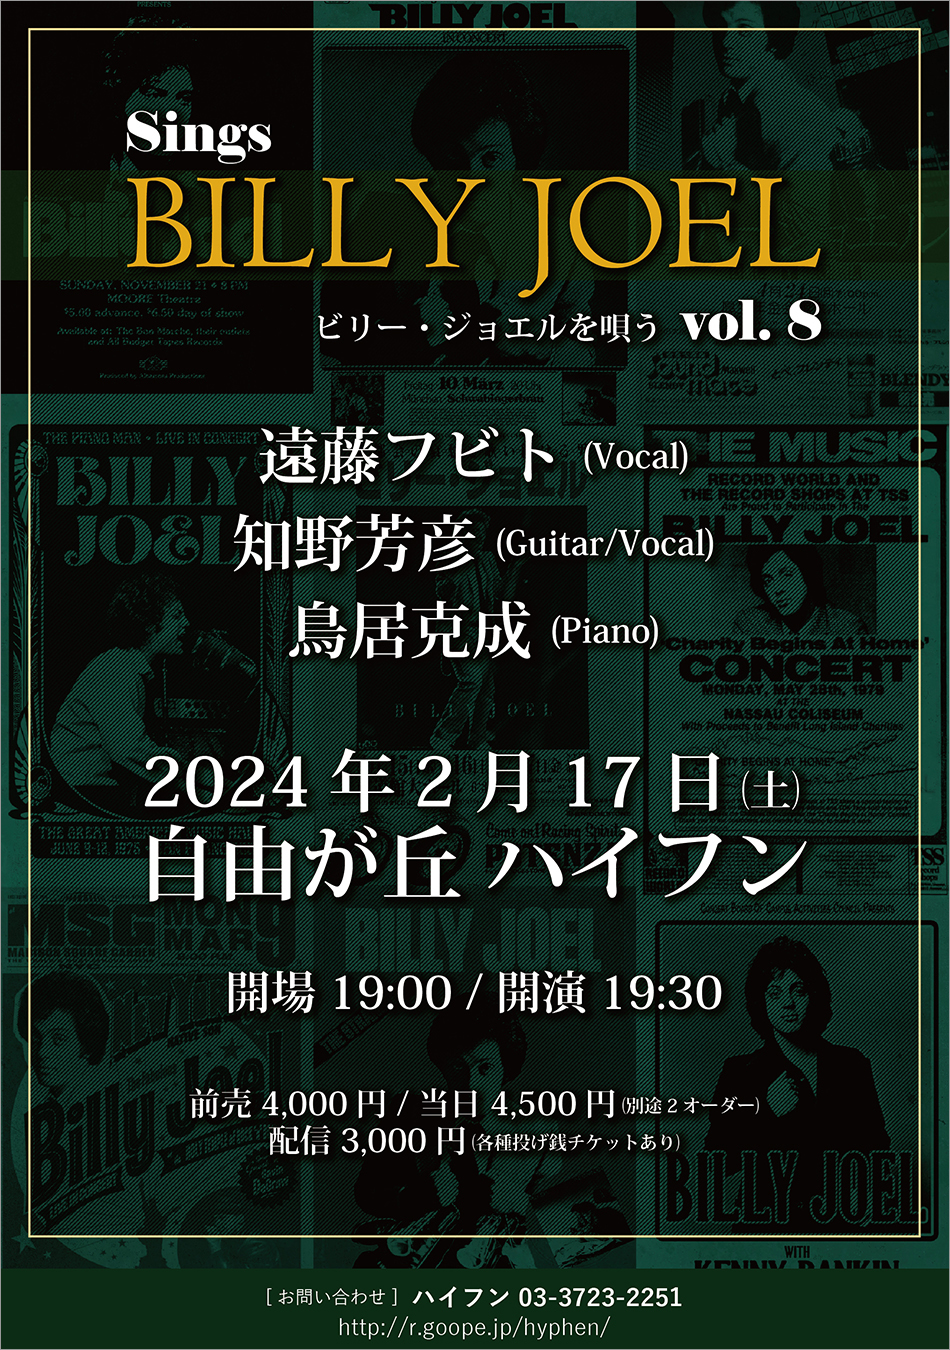 『Sings BILLY JOEL -ビリー・ジョエルを唄う- vol.8』